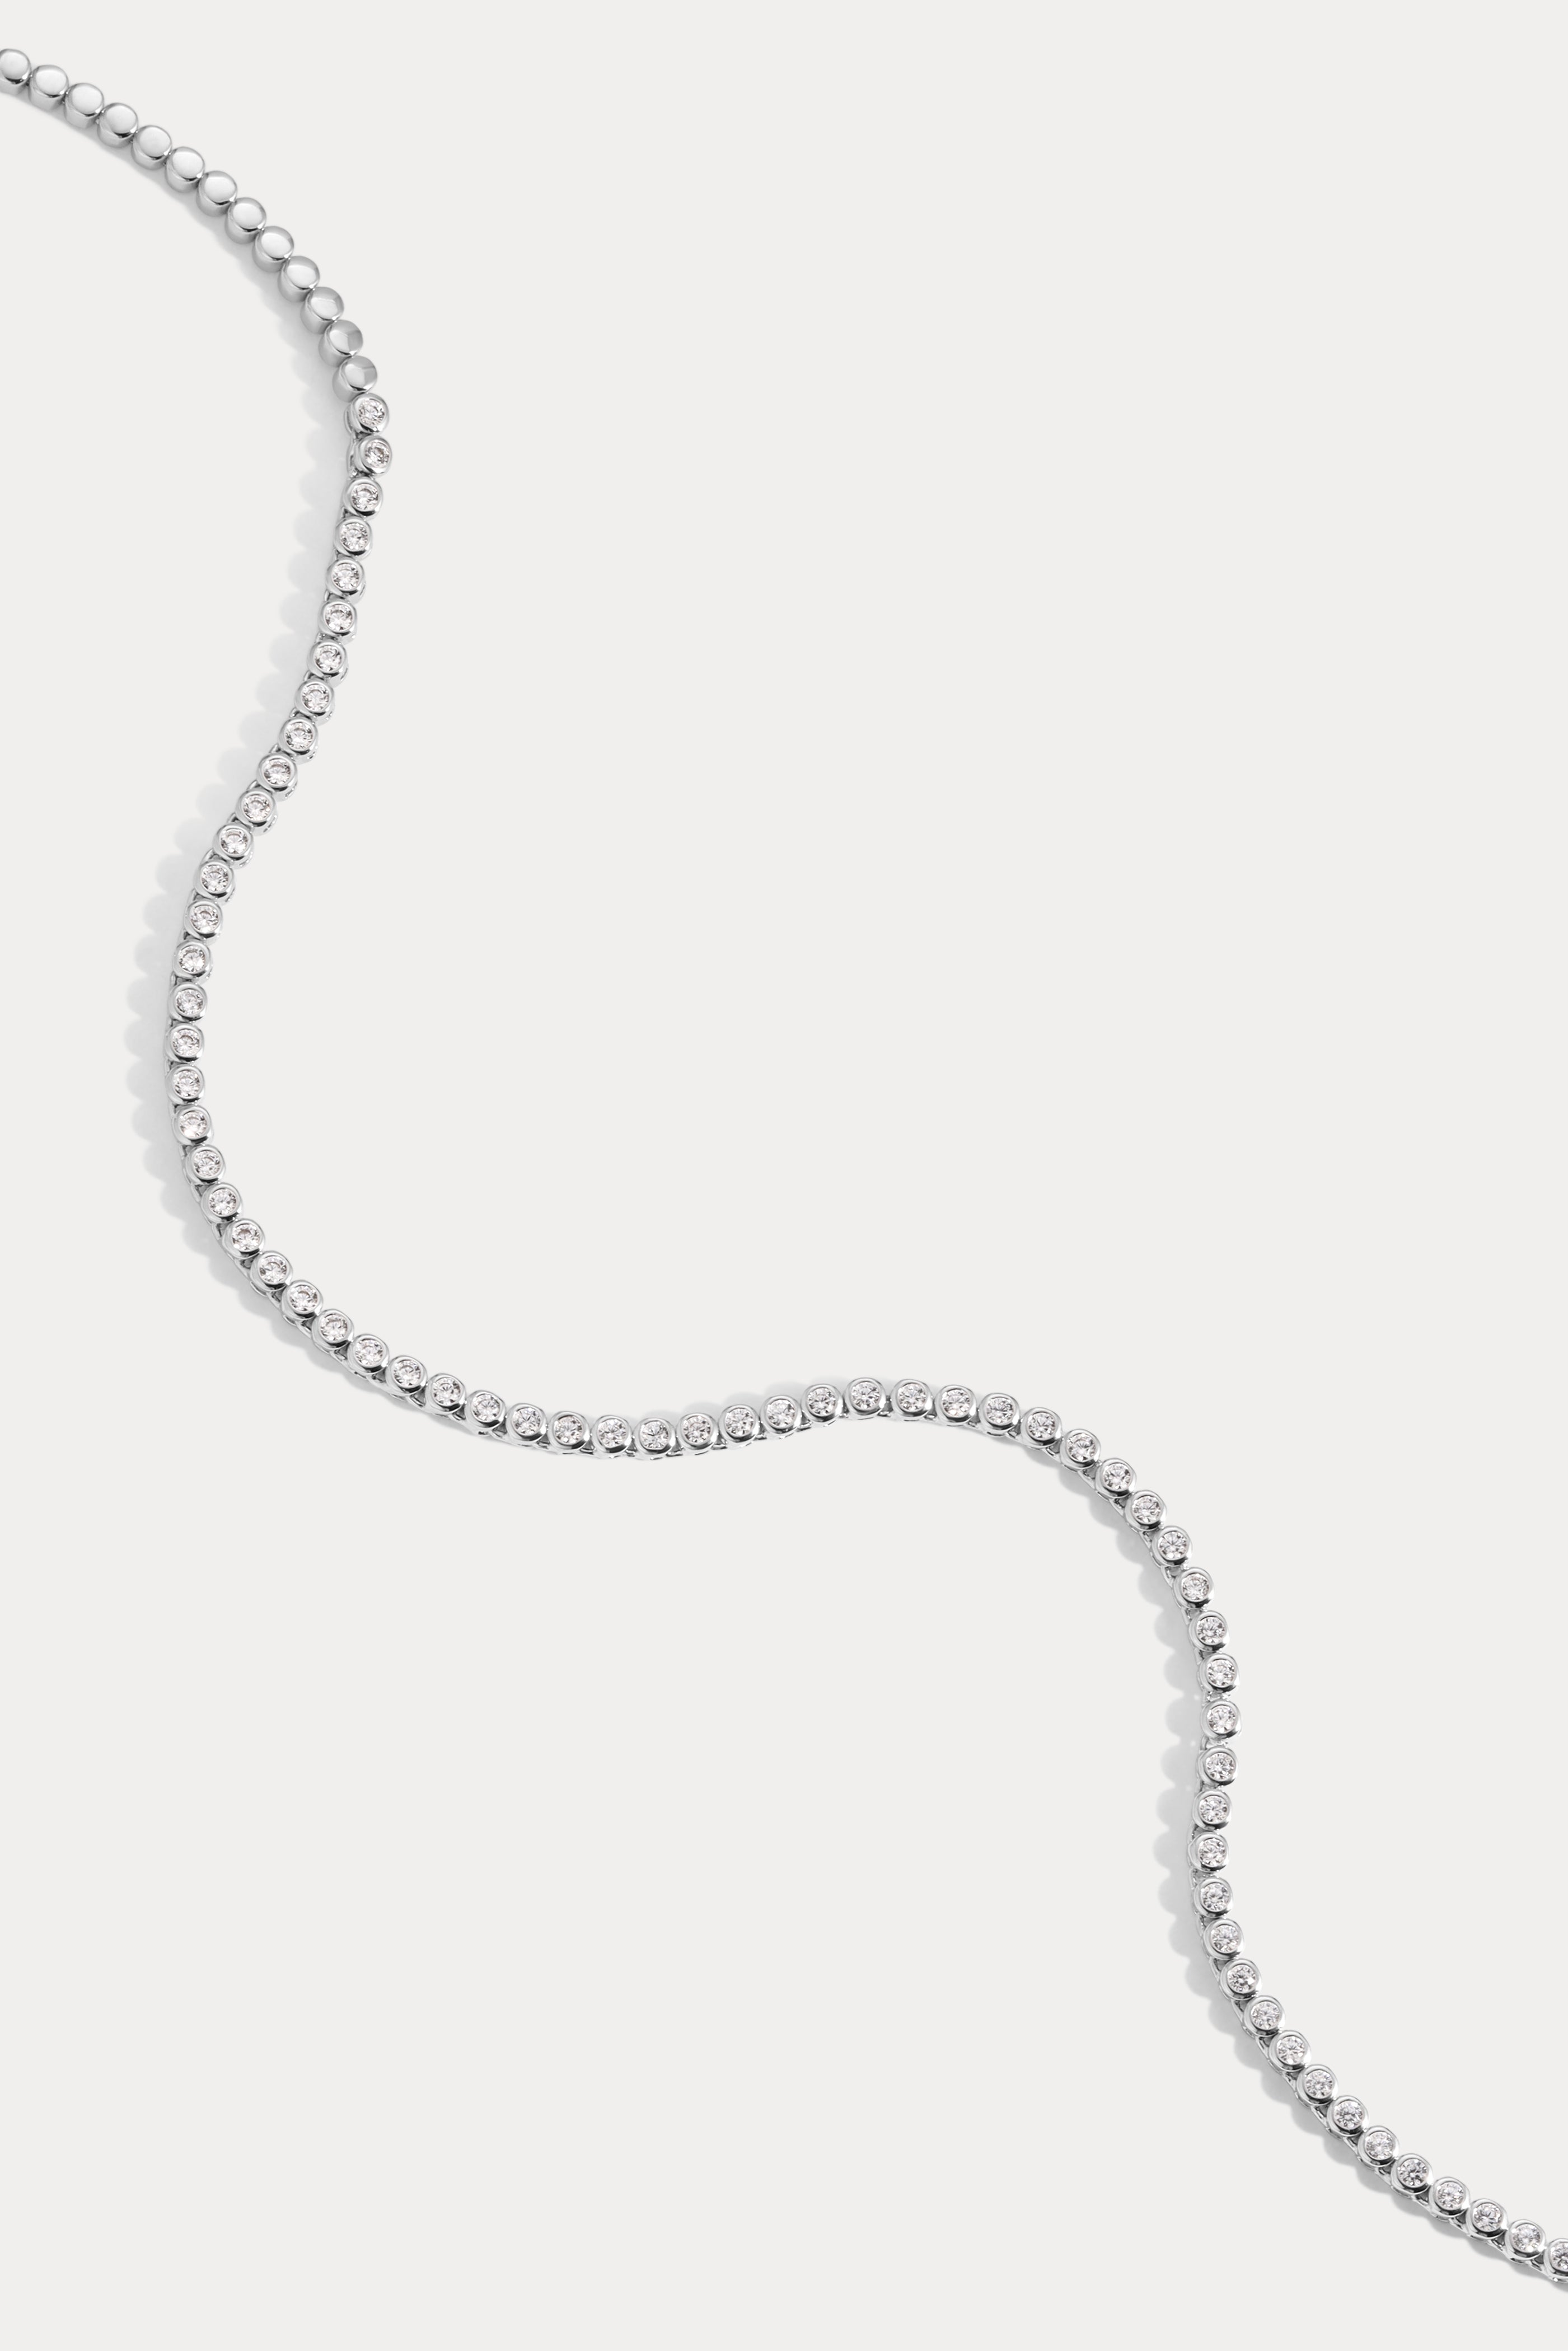 Gracie Silver Tennis Delicate Chain Bracelet in White Crystal | Kendra Scott